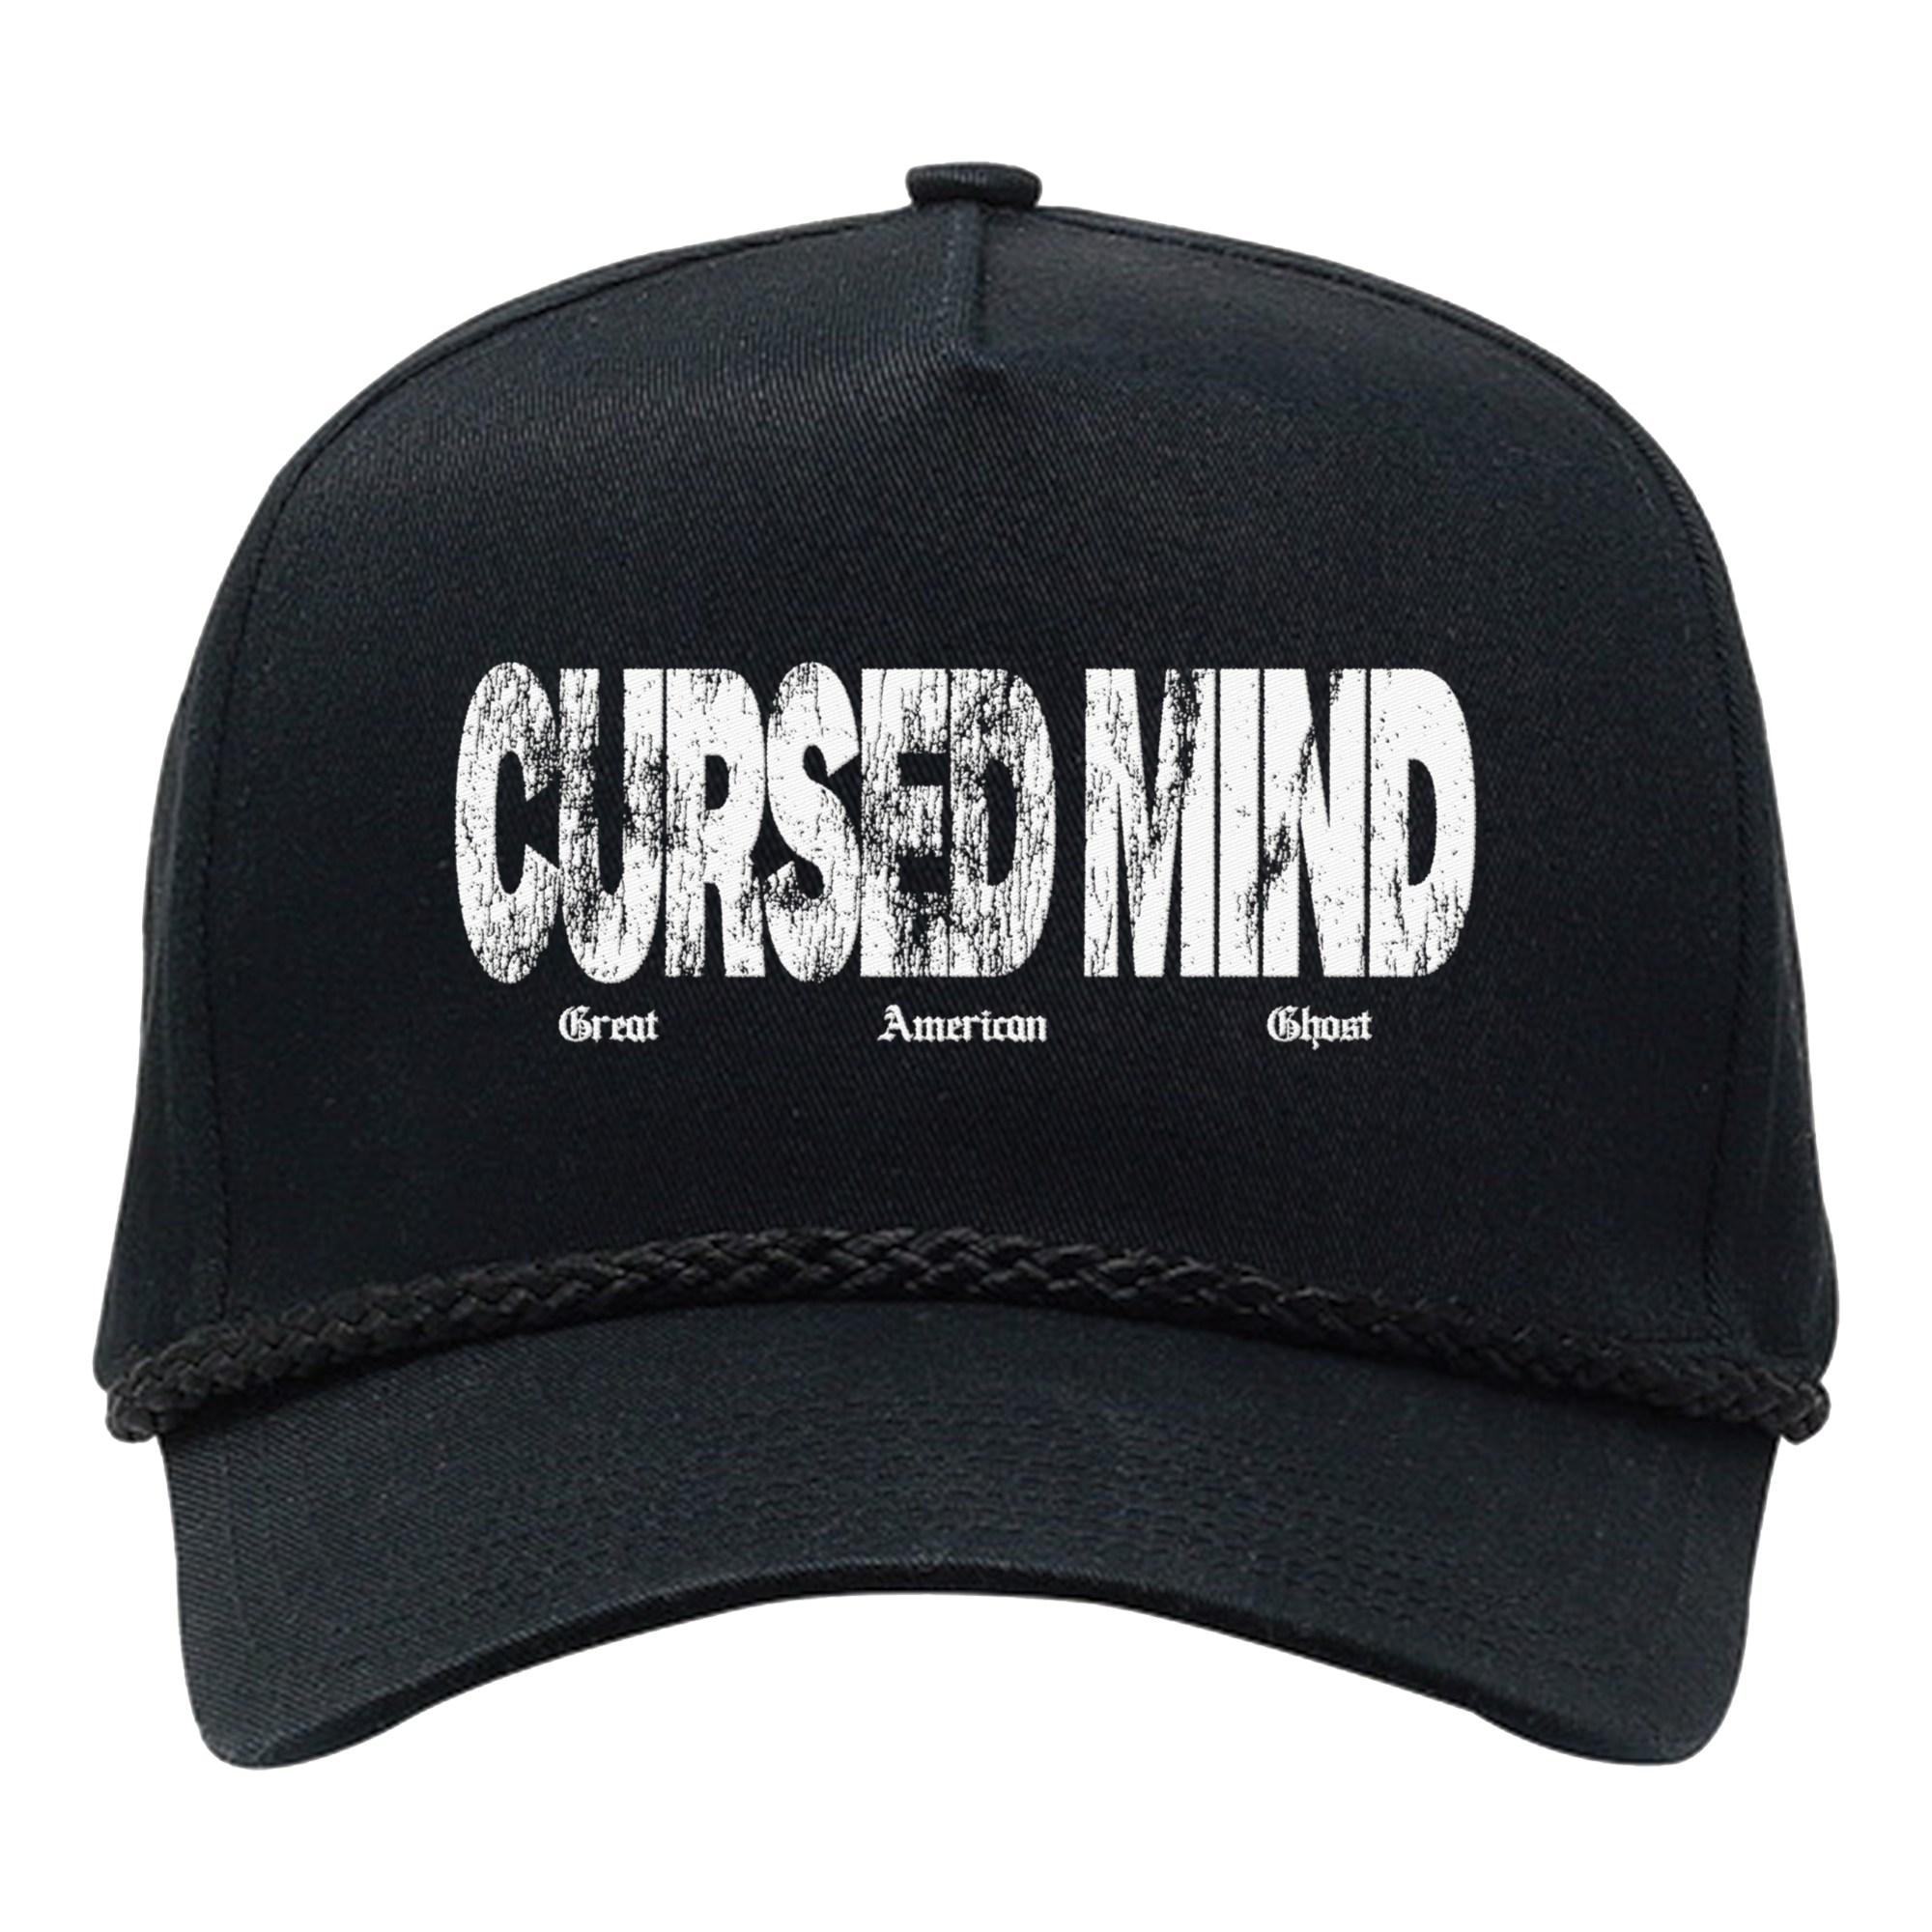 Great American Ghost - Cursed Mind Hat (Pre-Order)